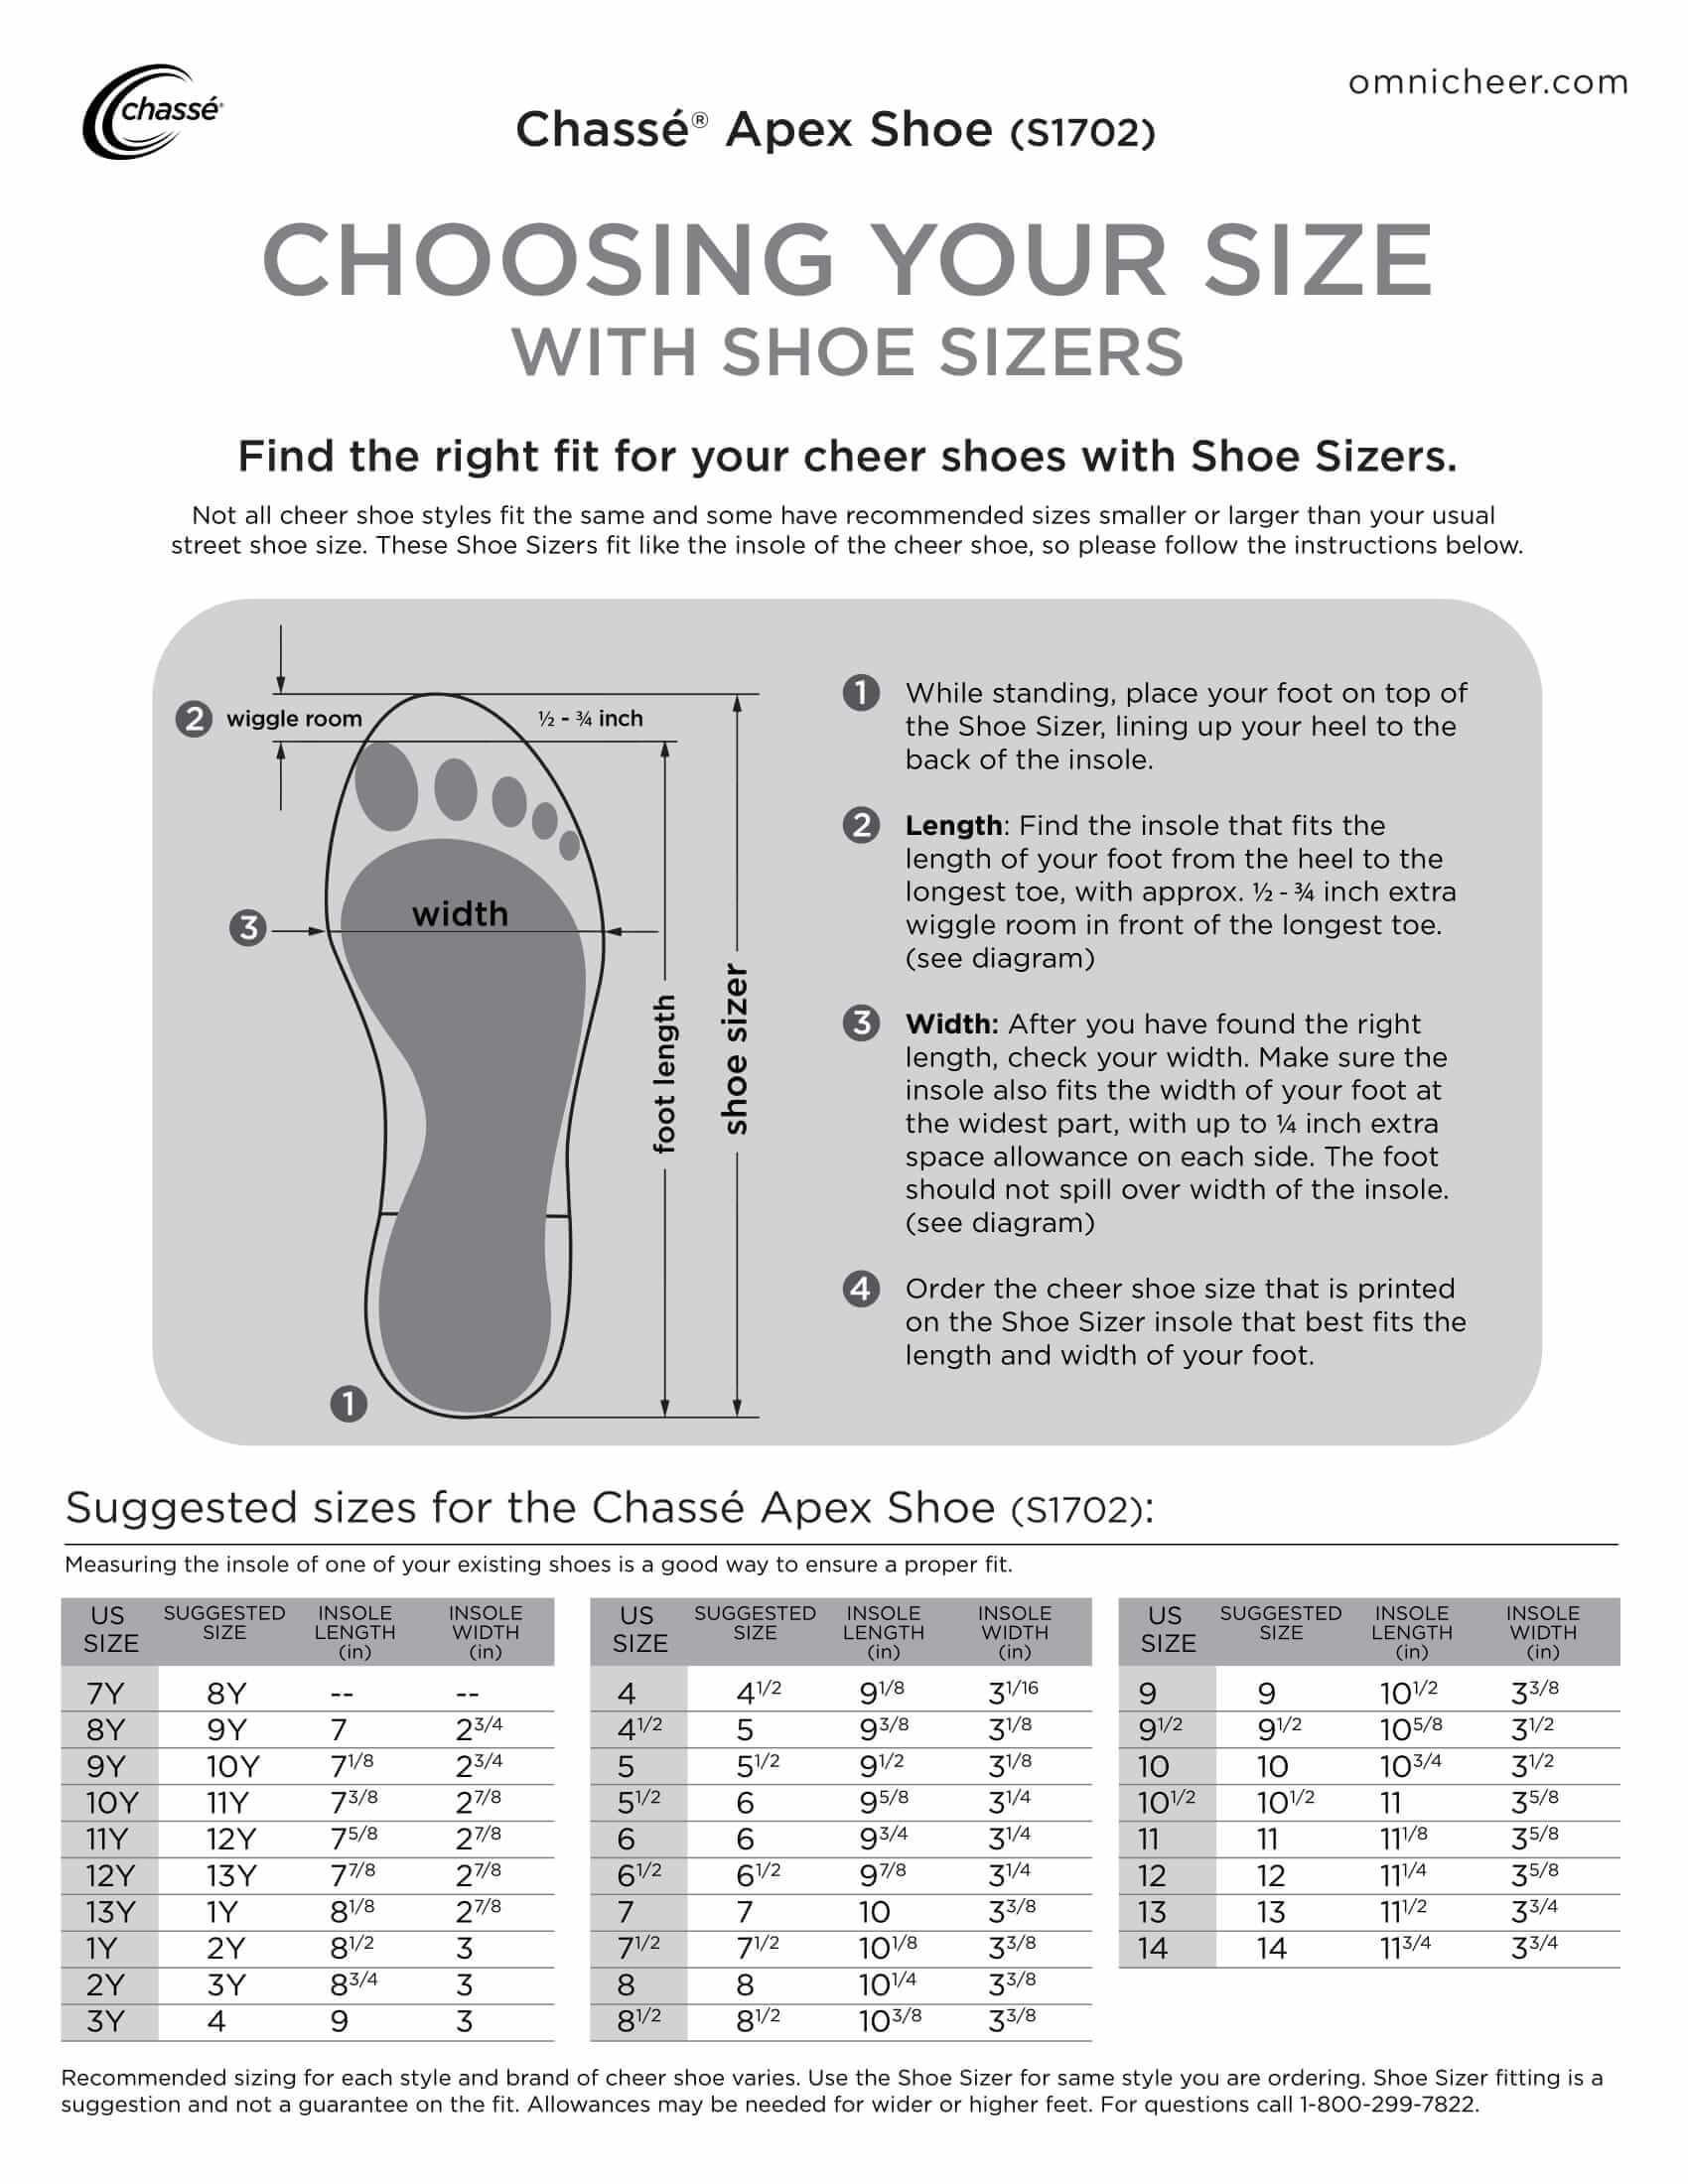 Shoe Sizer Fit Kit Info